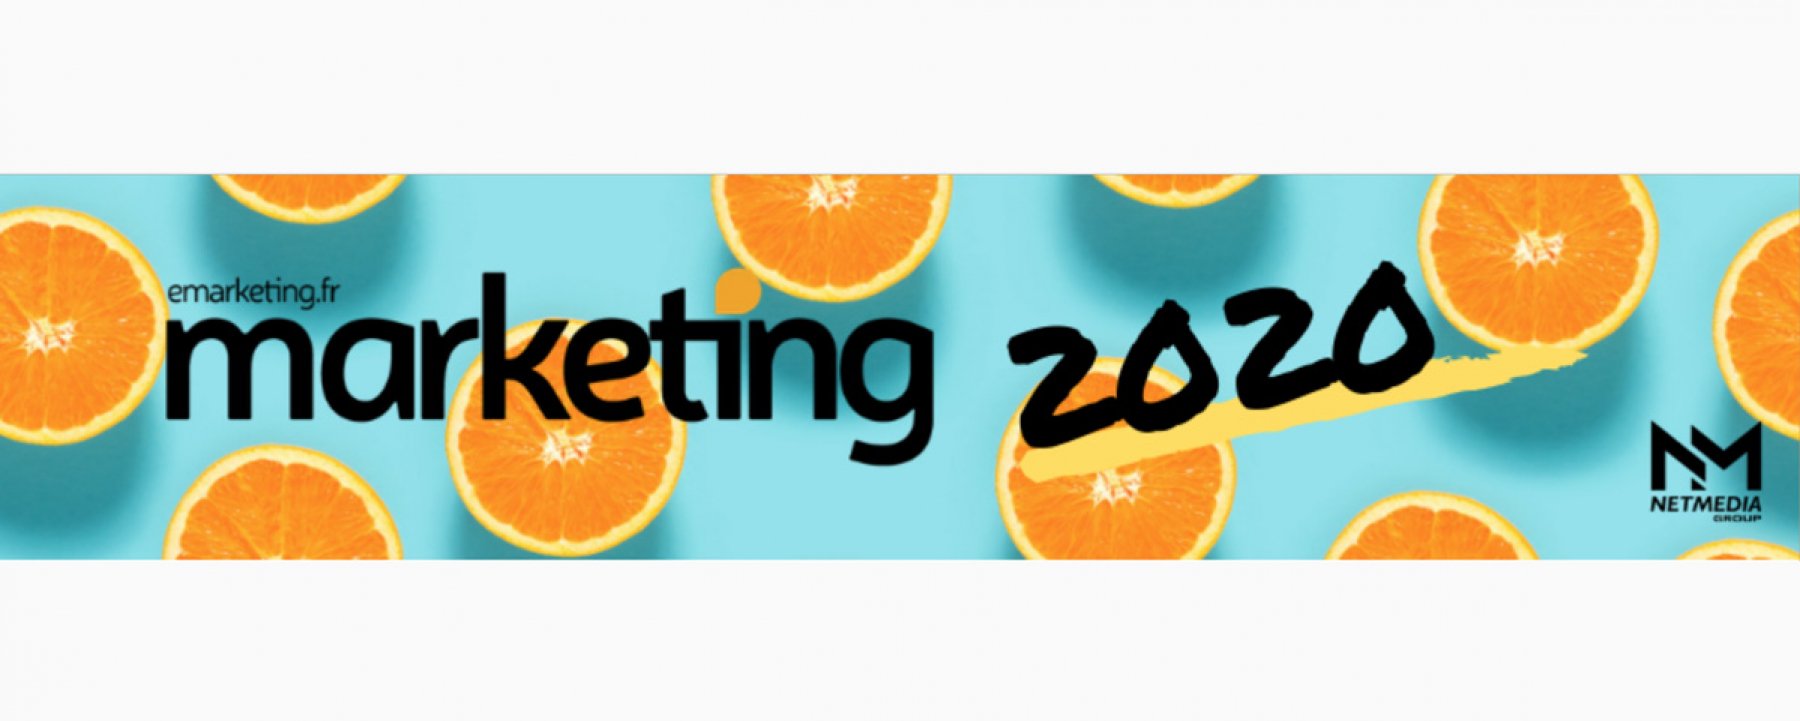 Bannière Marketing Magazine 2020, organisé par NetMedia Group